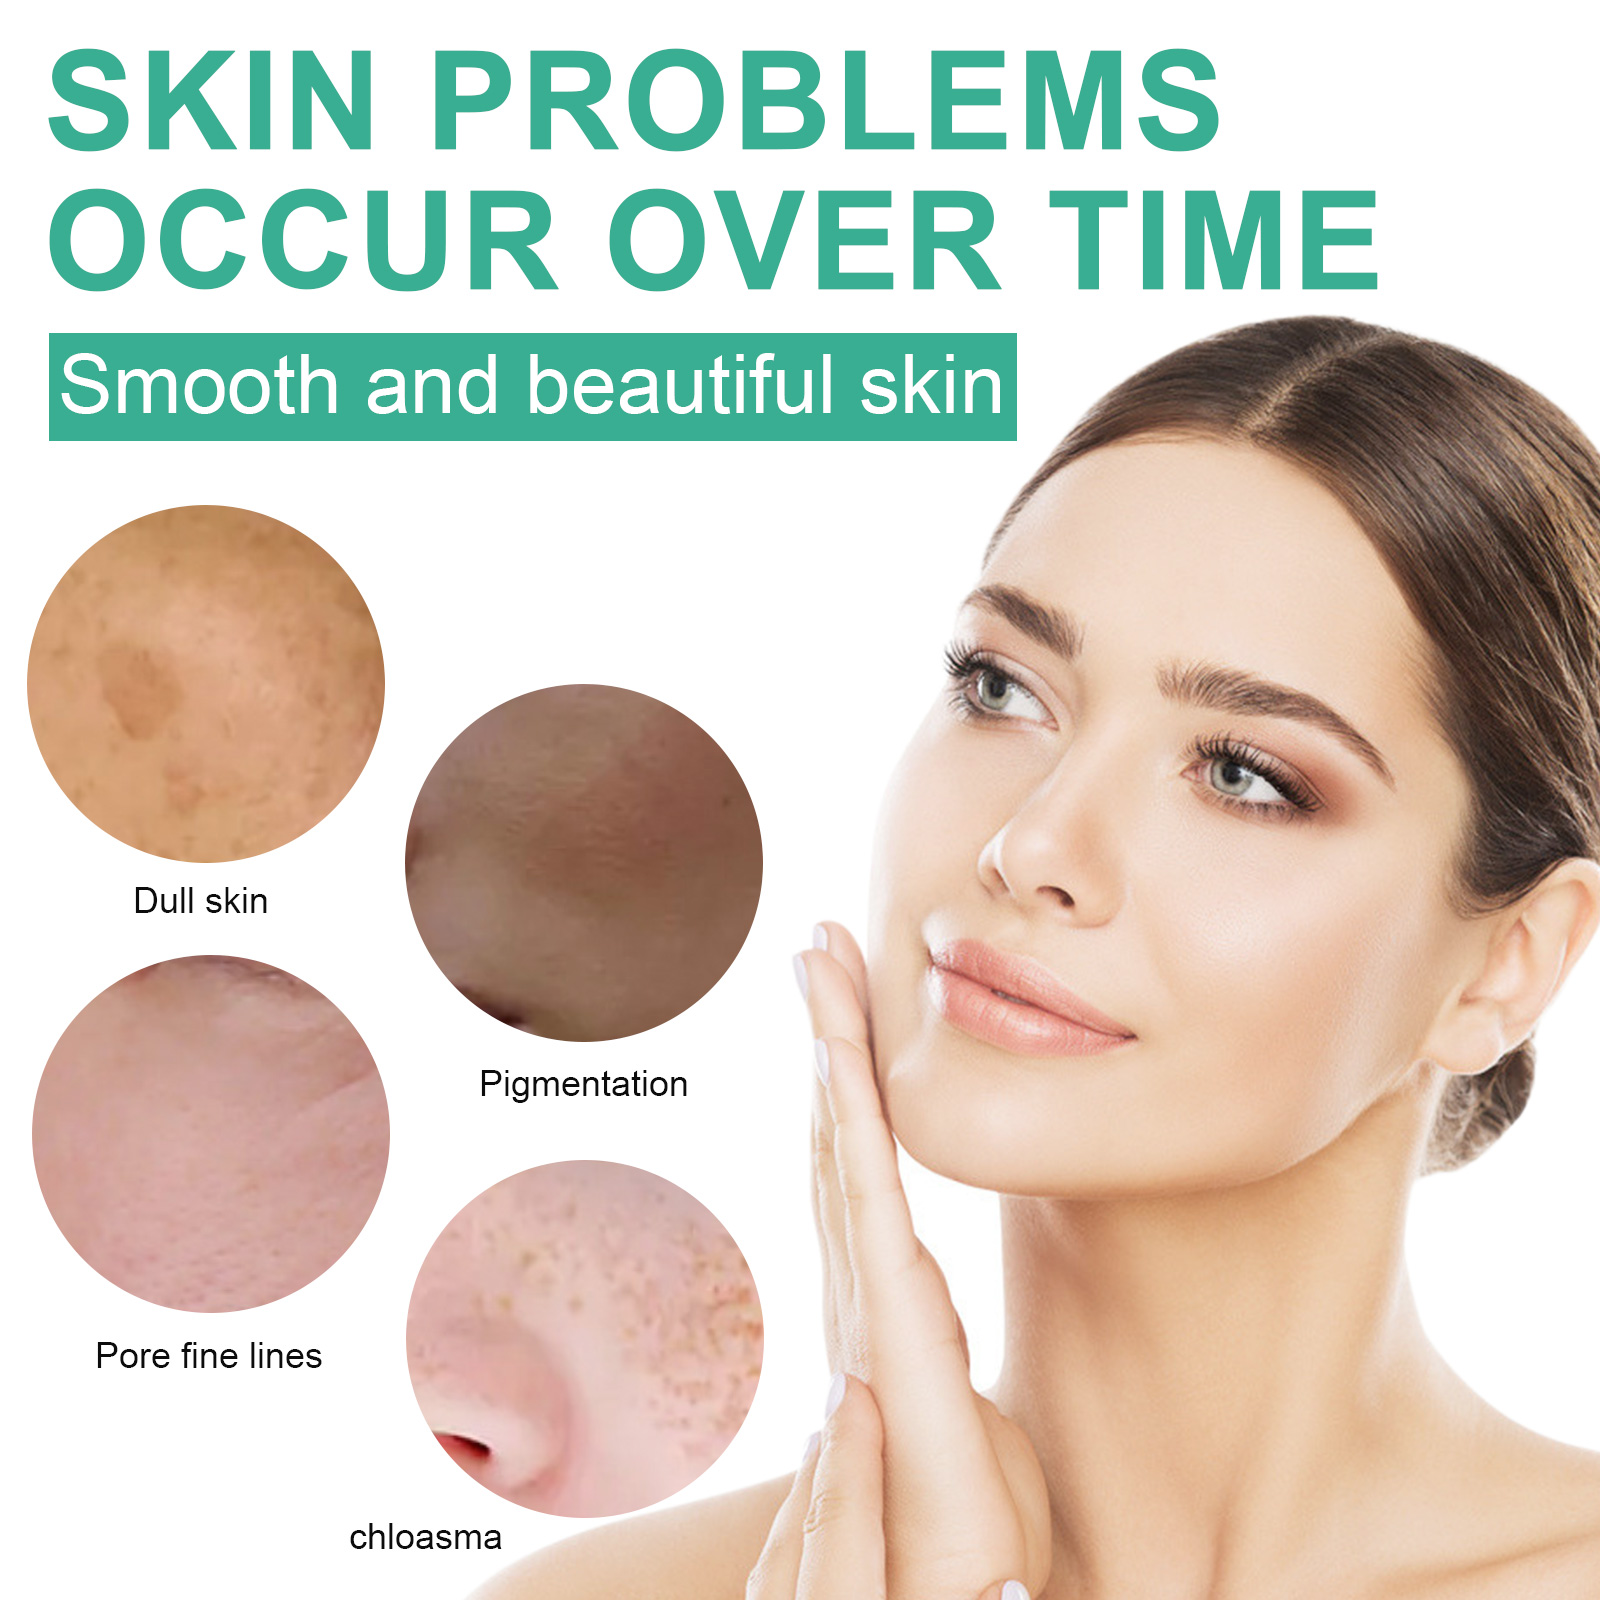 Iffudoit Dark Spot Remover Face Body Skin Tone Corrector Freckle Aging Blemishes Whitening Pigmentation Lightening 50ml Hyaluronic Acid Retinol